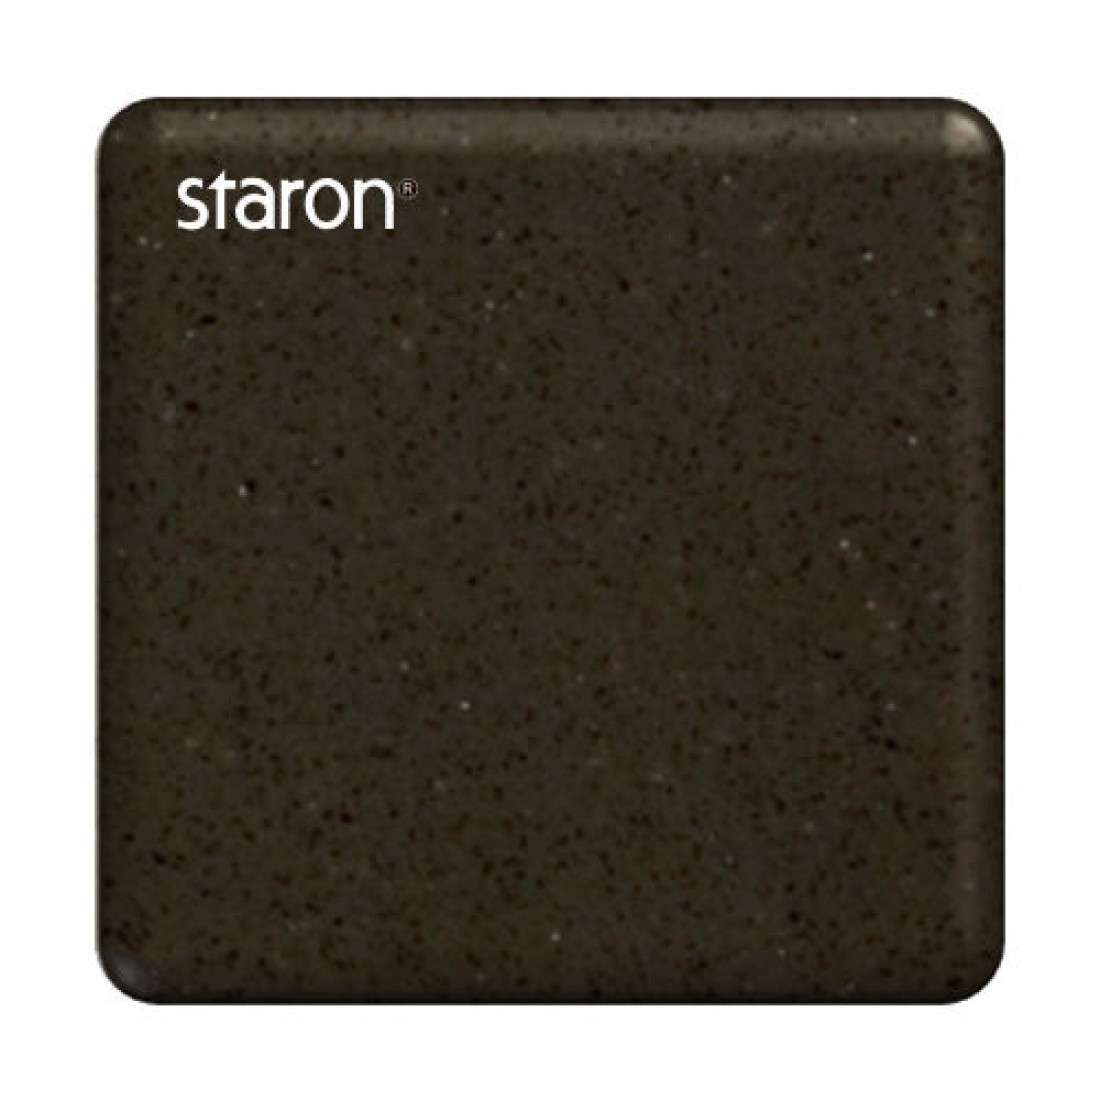 Staron sc457 sanded Chestnut